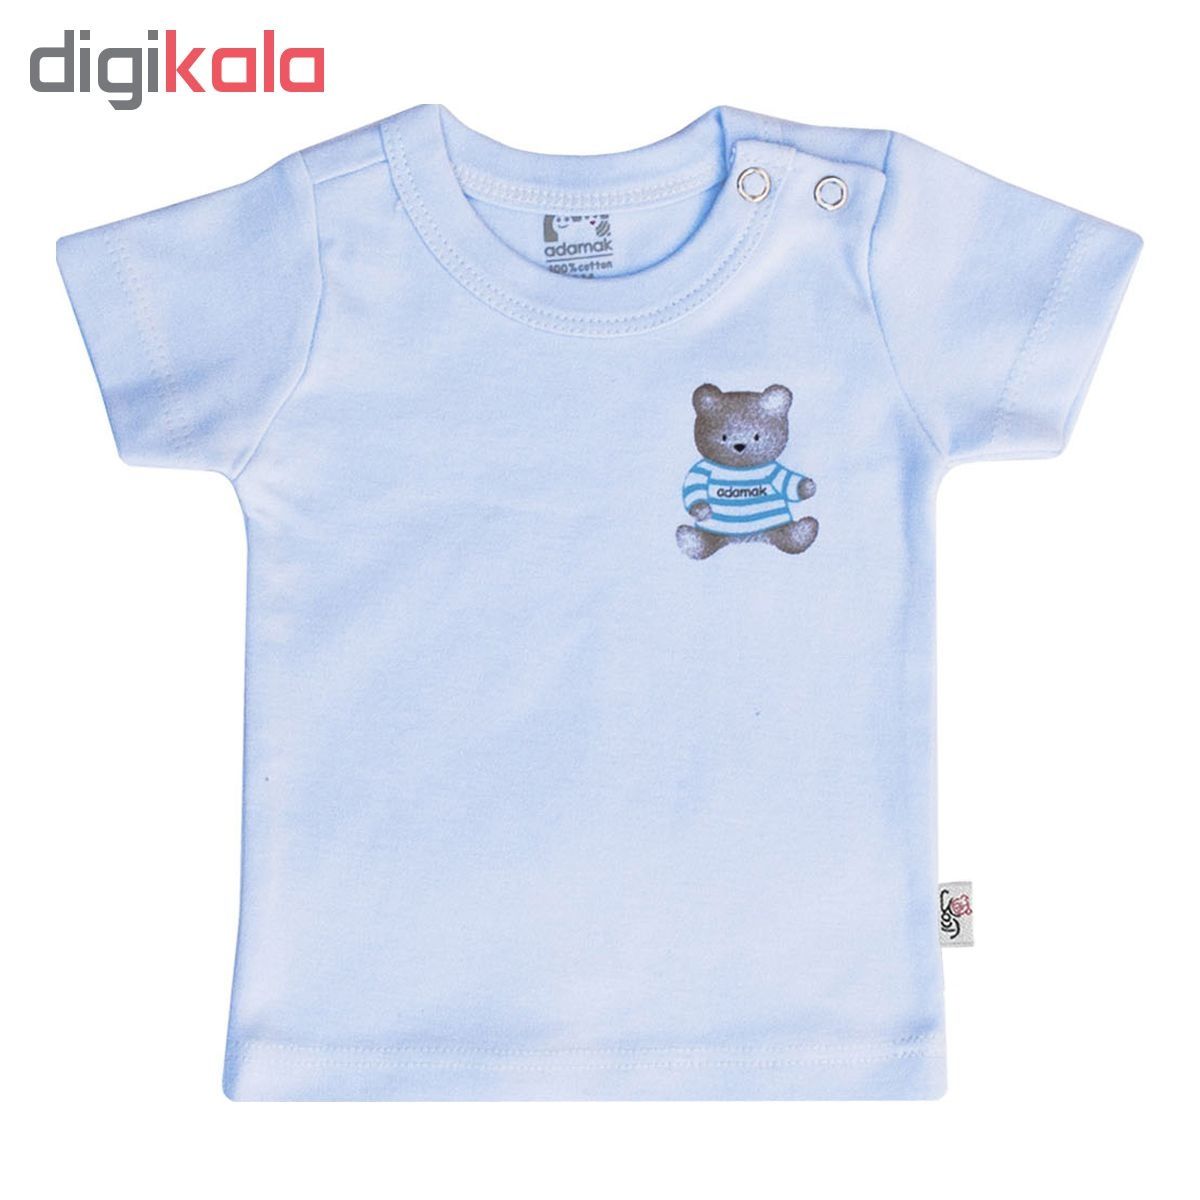  تی شرت آستین کوتاه نوزاد آدمک طرح خرس رنگ آبی -  - 2